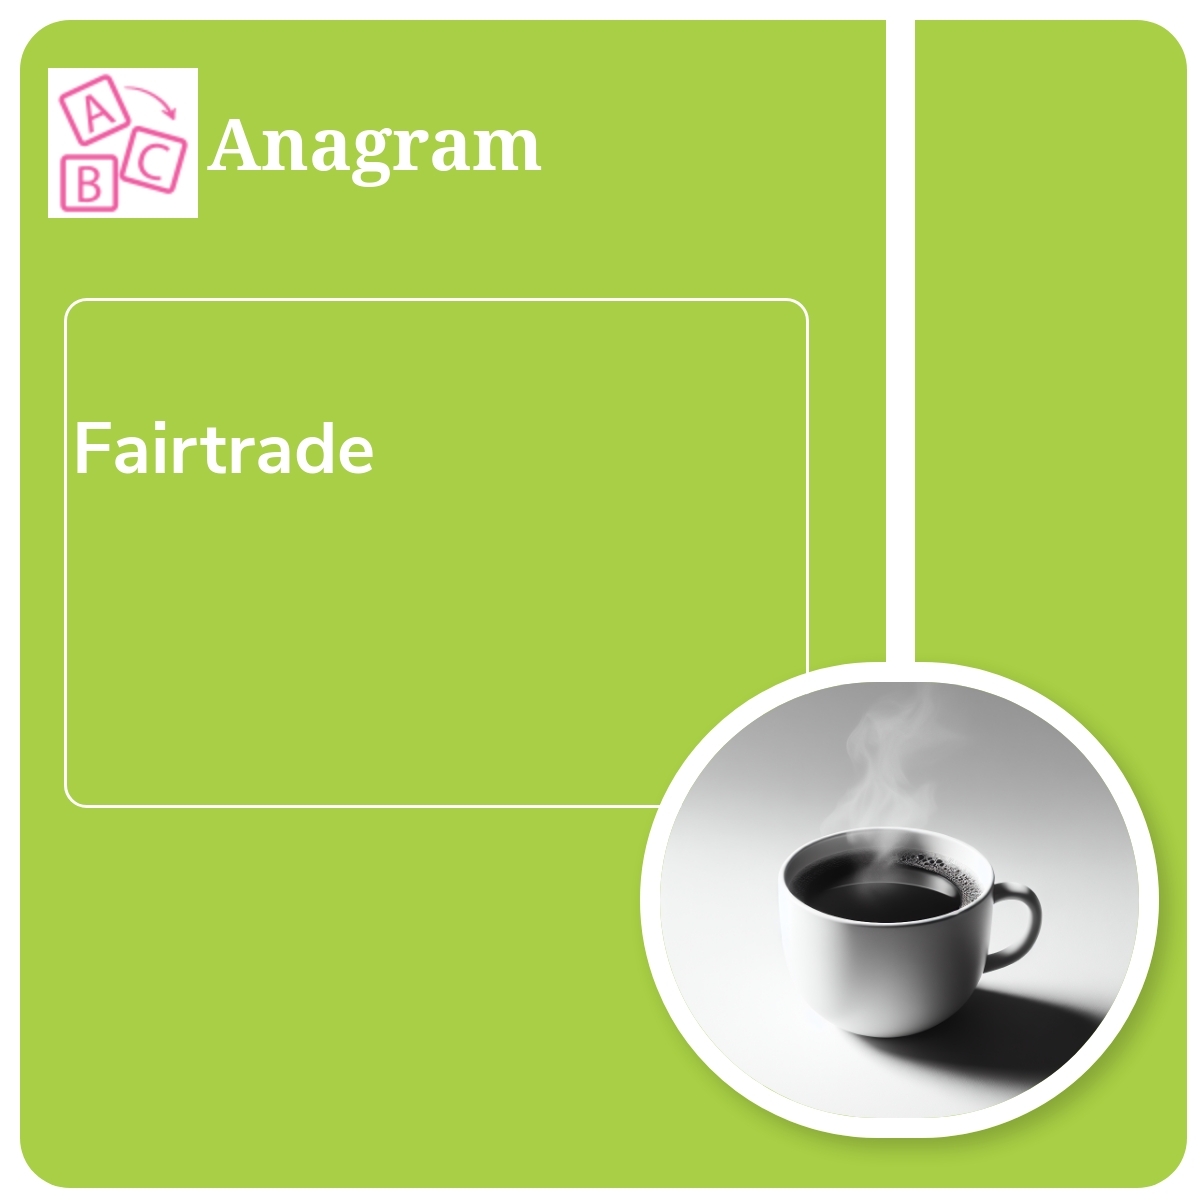 Simple Anagram: Fairtrade